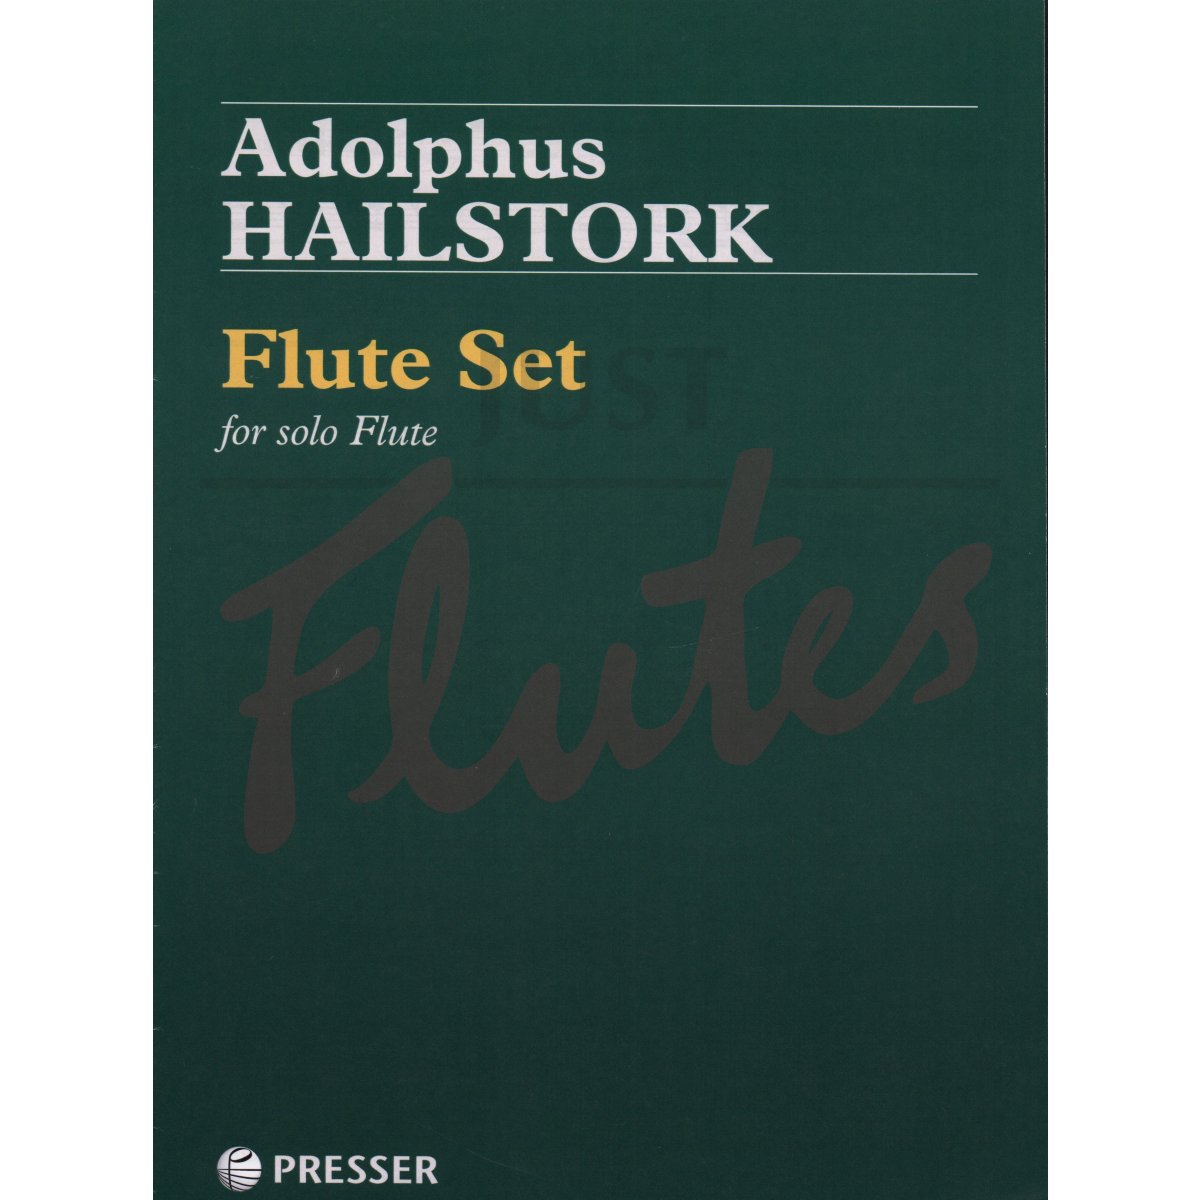 Flute Set for Solo Flute